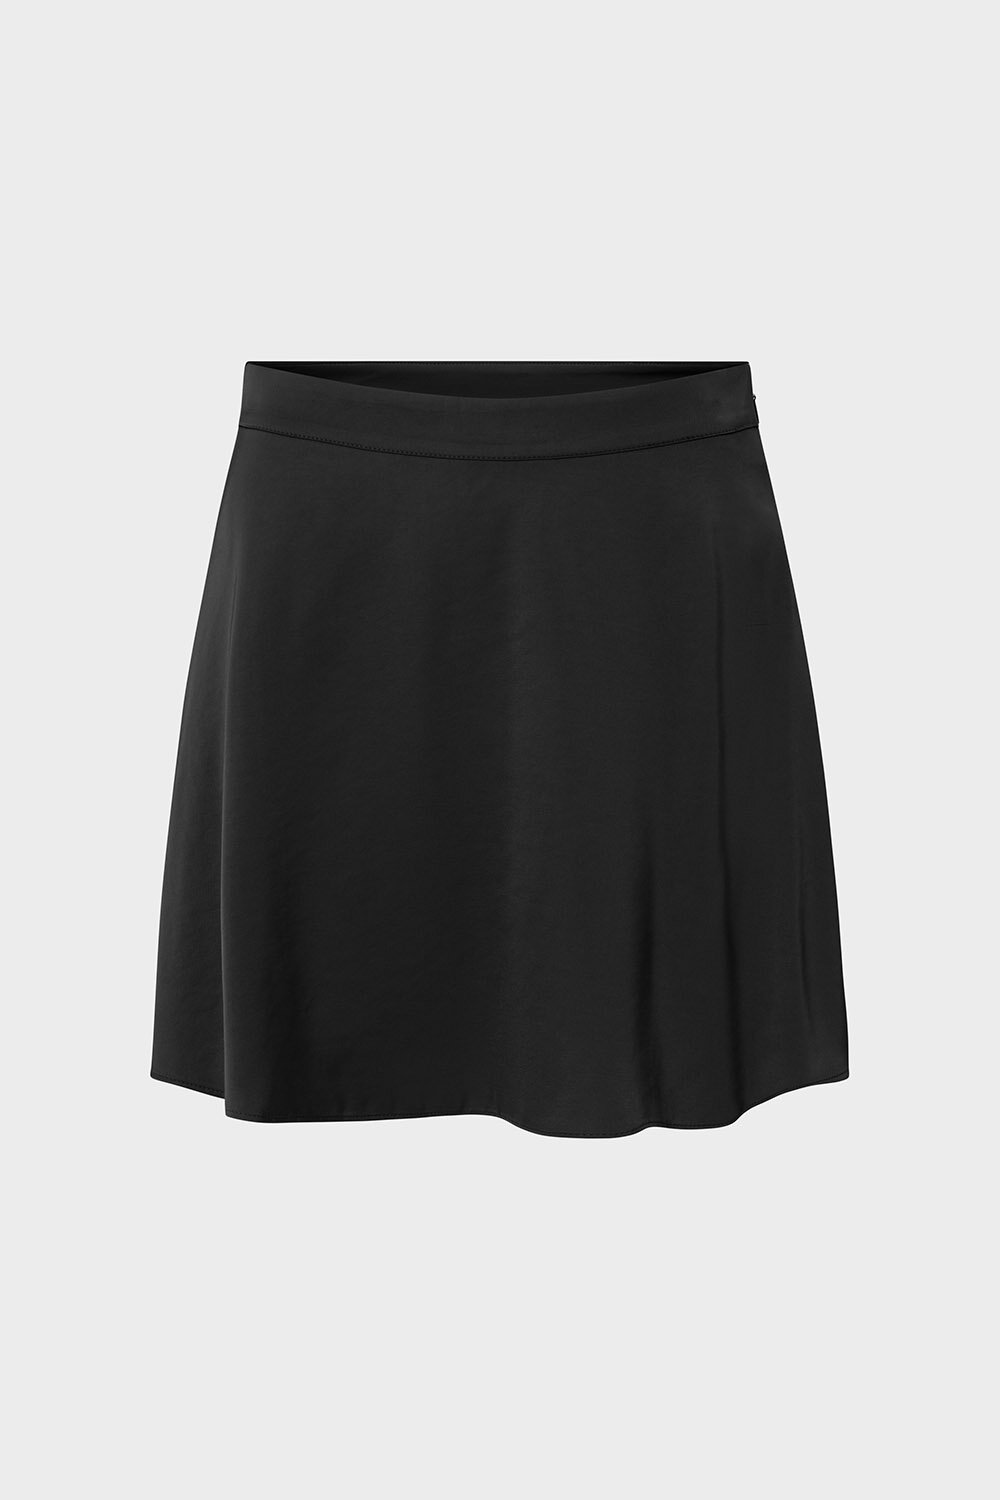 Kirsty Skirt